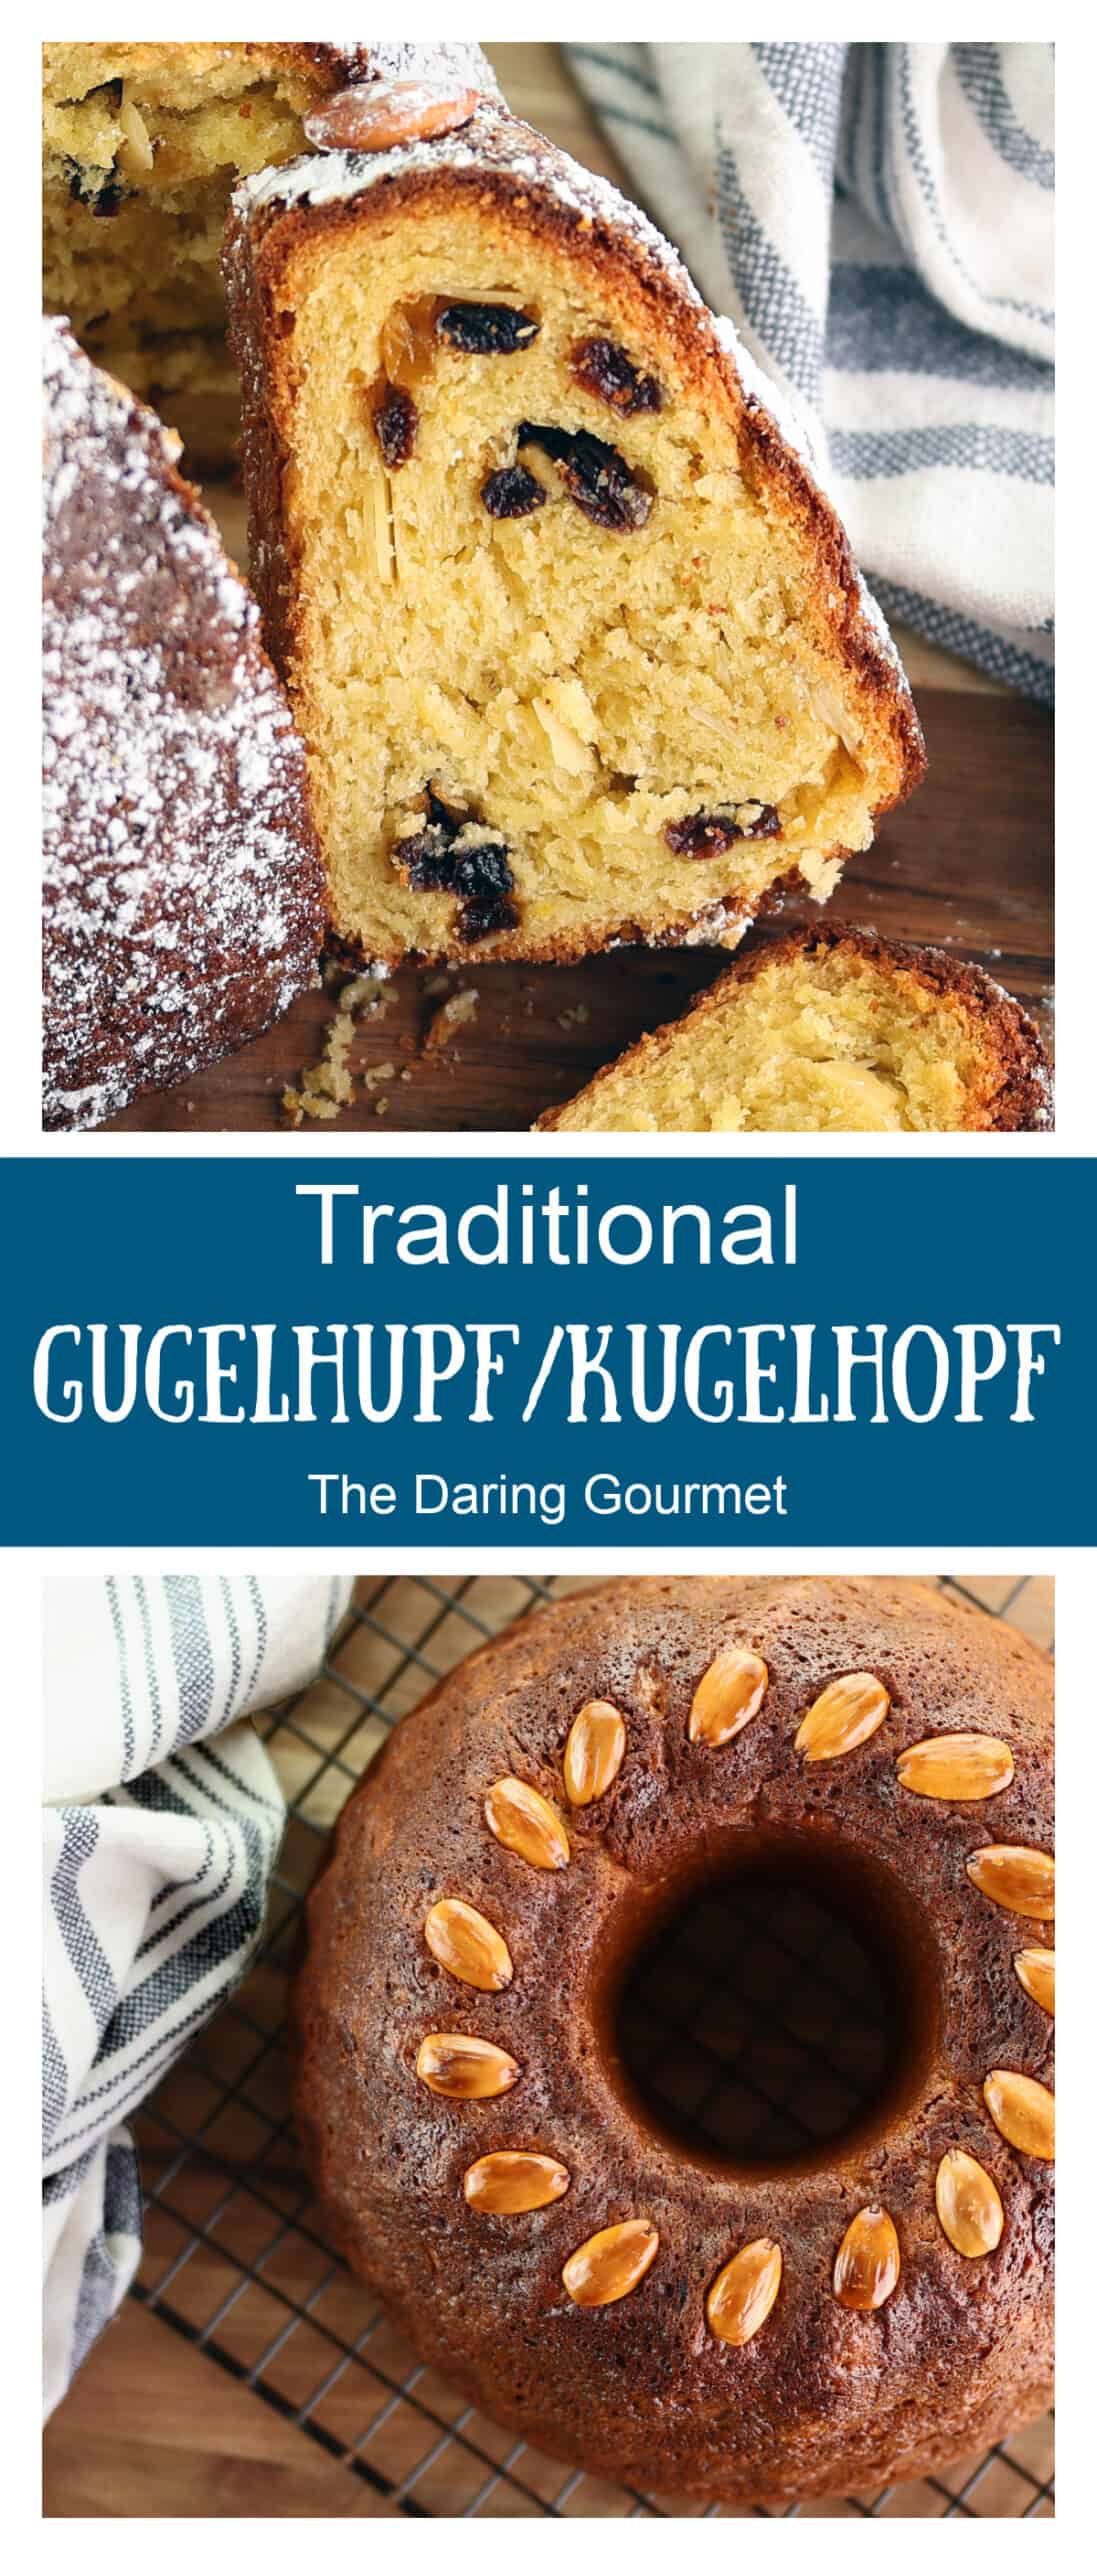 gugelhupf recipe kugelhopf German bread cake christmas raisins rum nuts almonds butter egg yolks lard traditional authentic kougelhopf